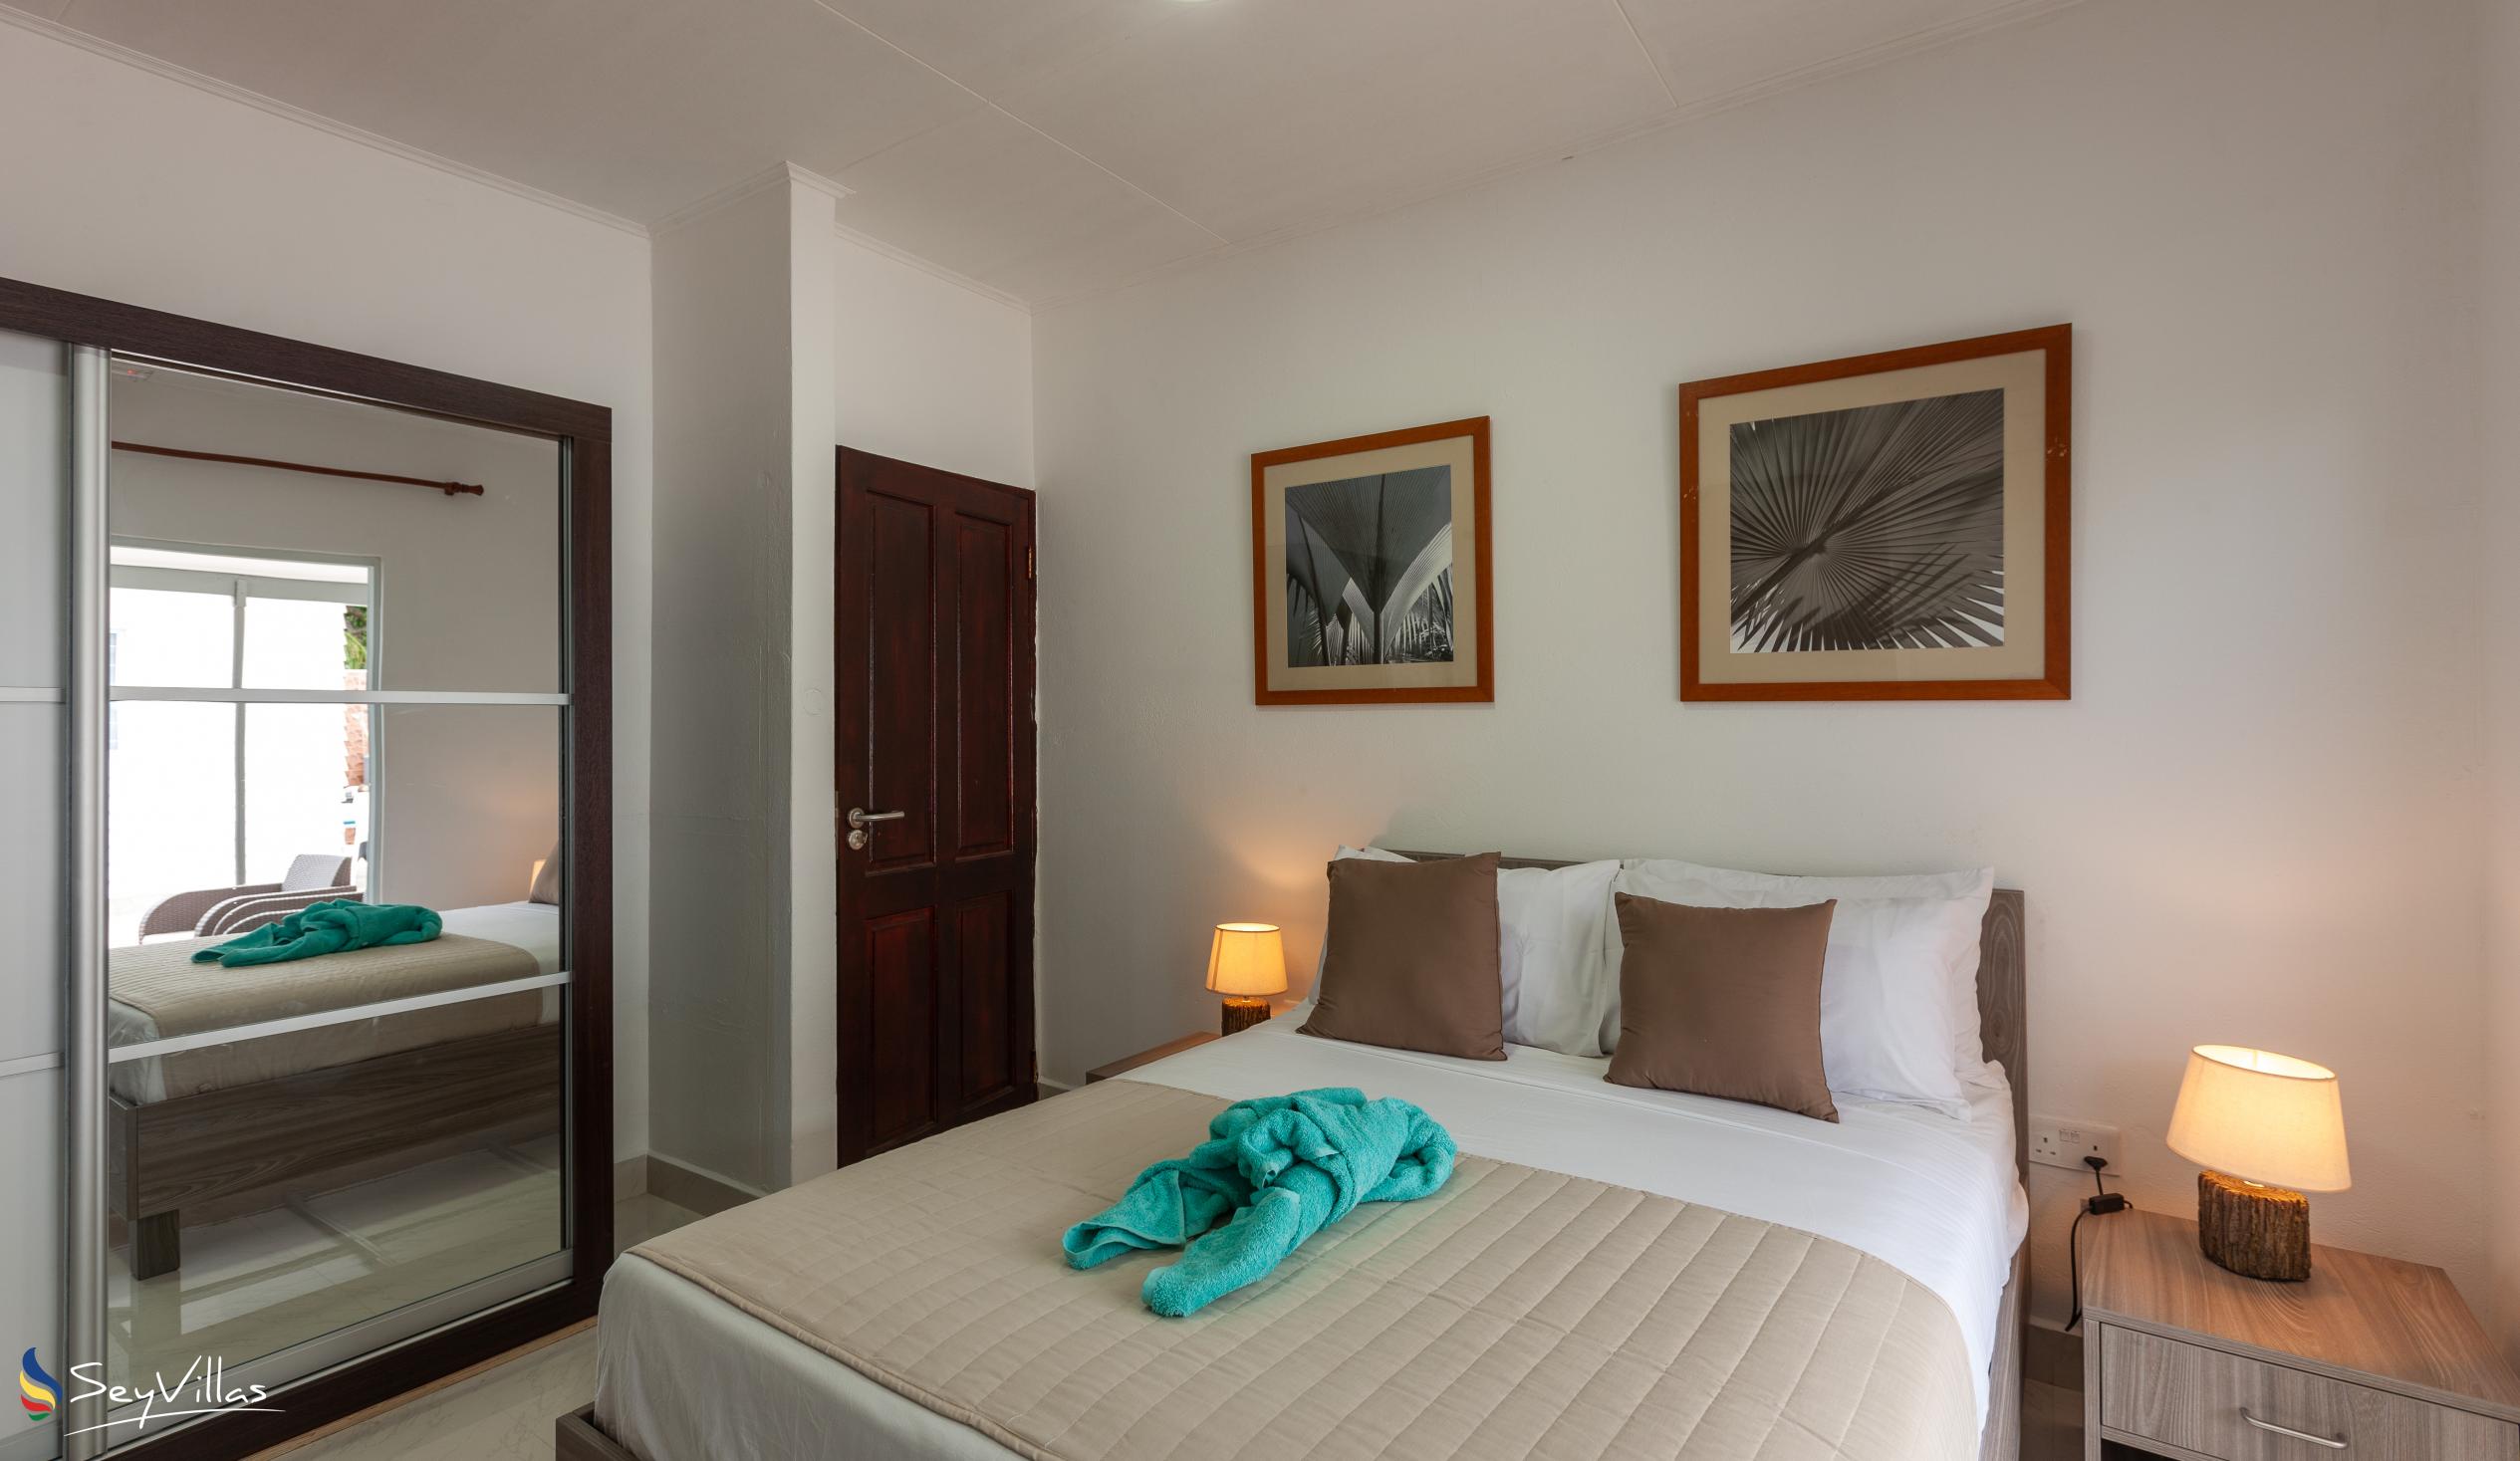 Foto 48: Hotel Plein Soleil - Camera Familiare - Praslin (Seychelles)